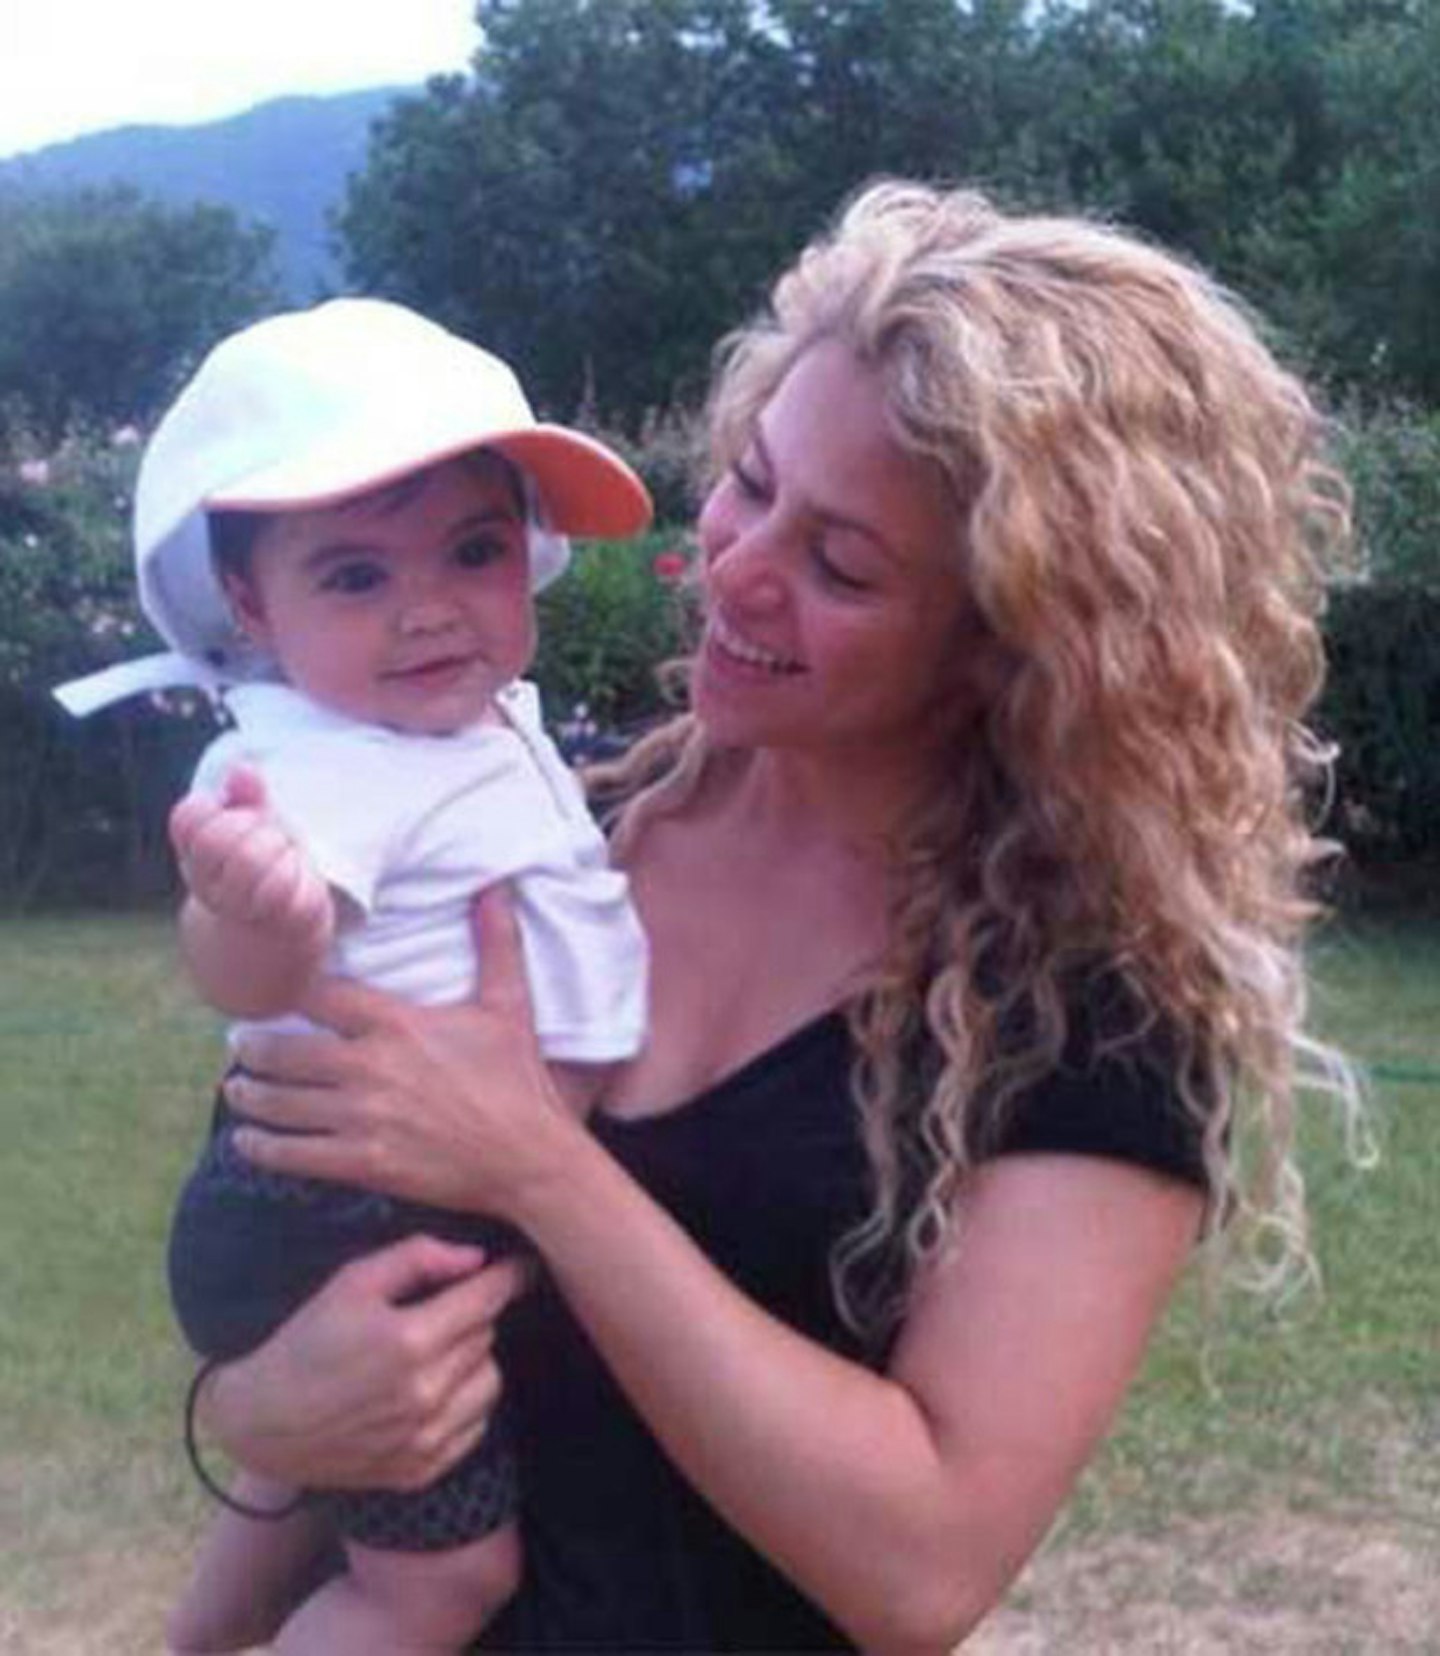 January 2013: Shakira welcomed son Milan